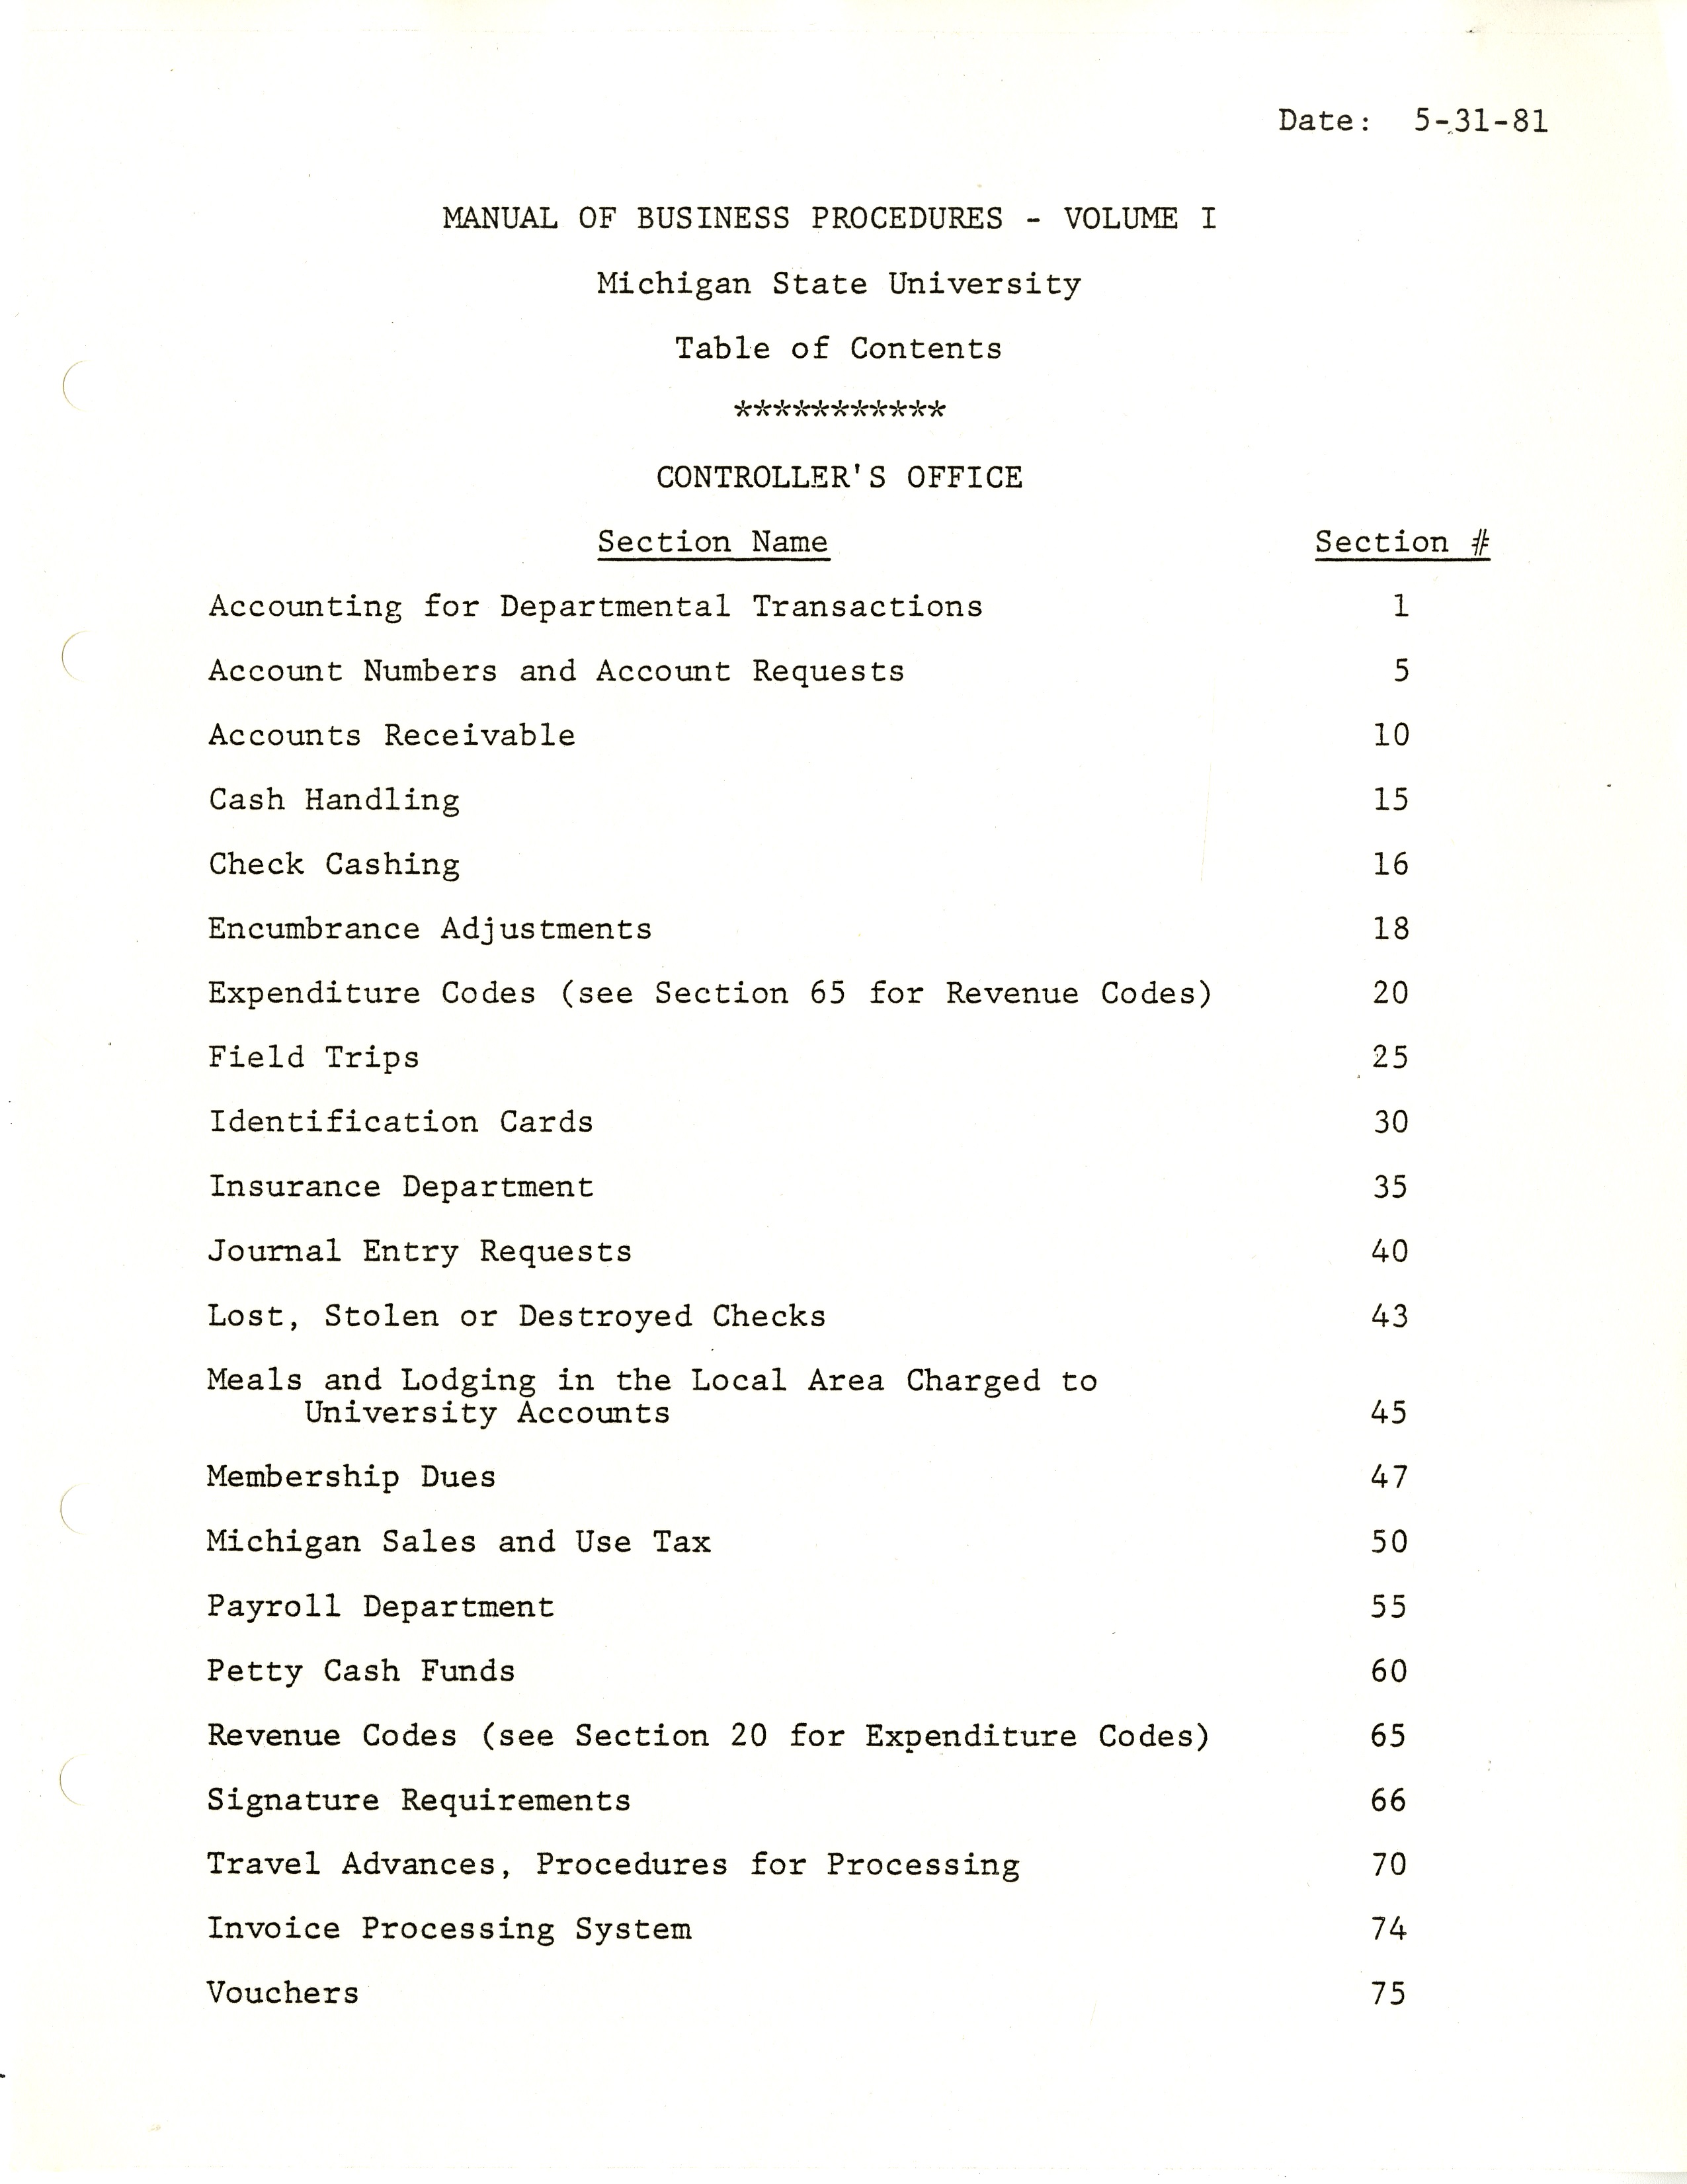 MSU Manual of Business Procedures, 1981